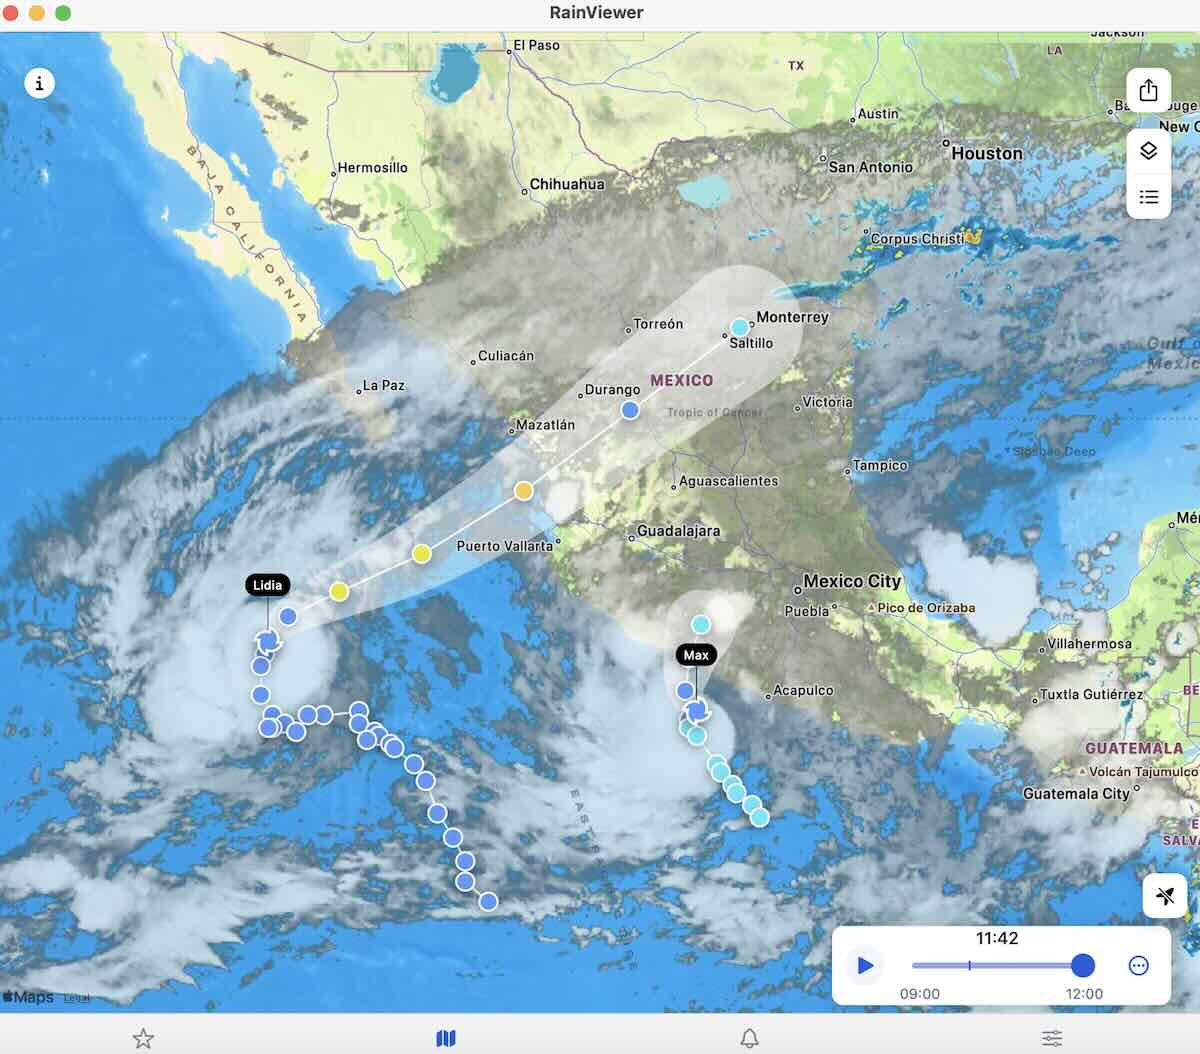 Hurricane Lidia's path on the RainViewer map